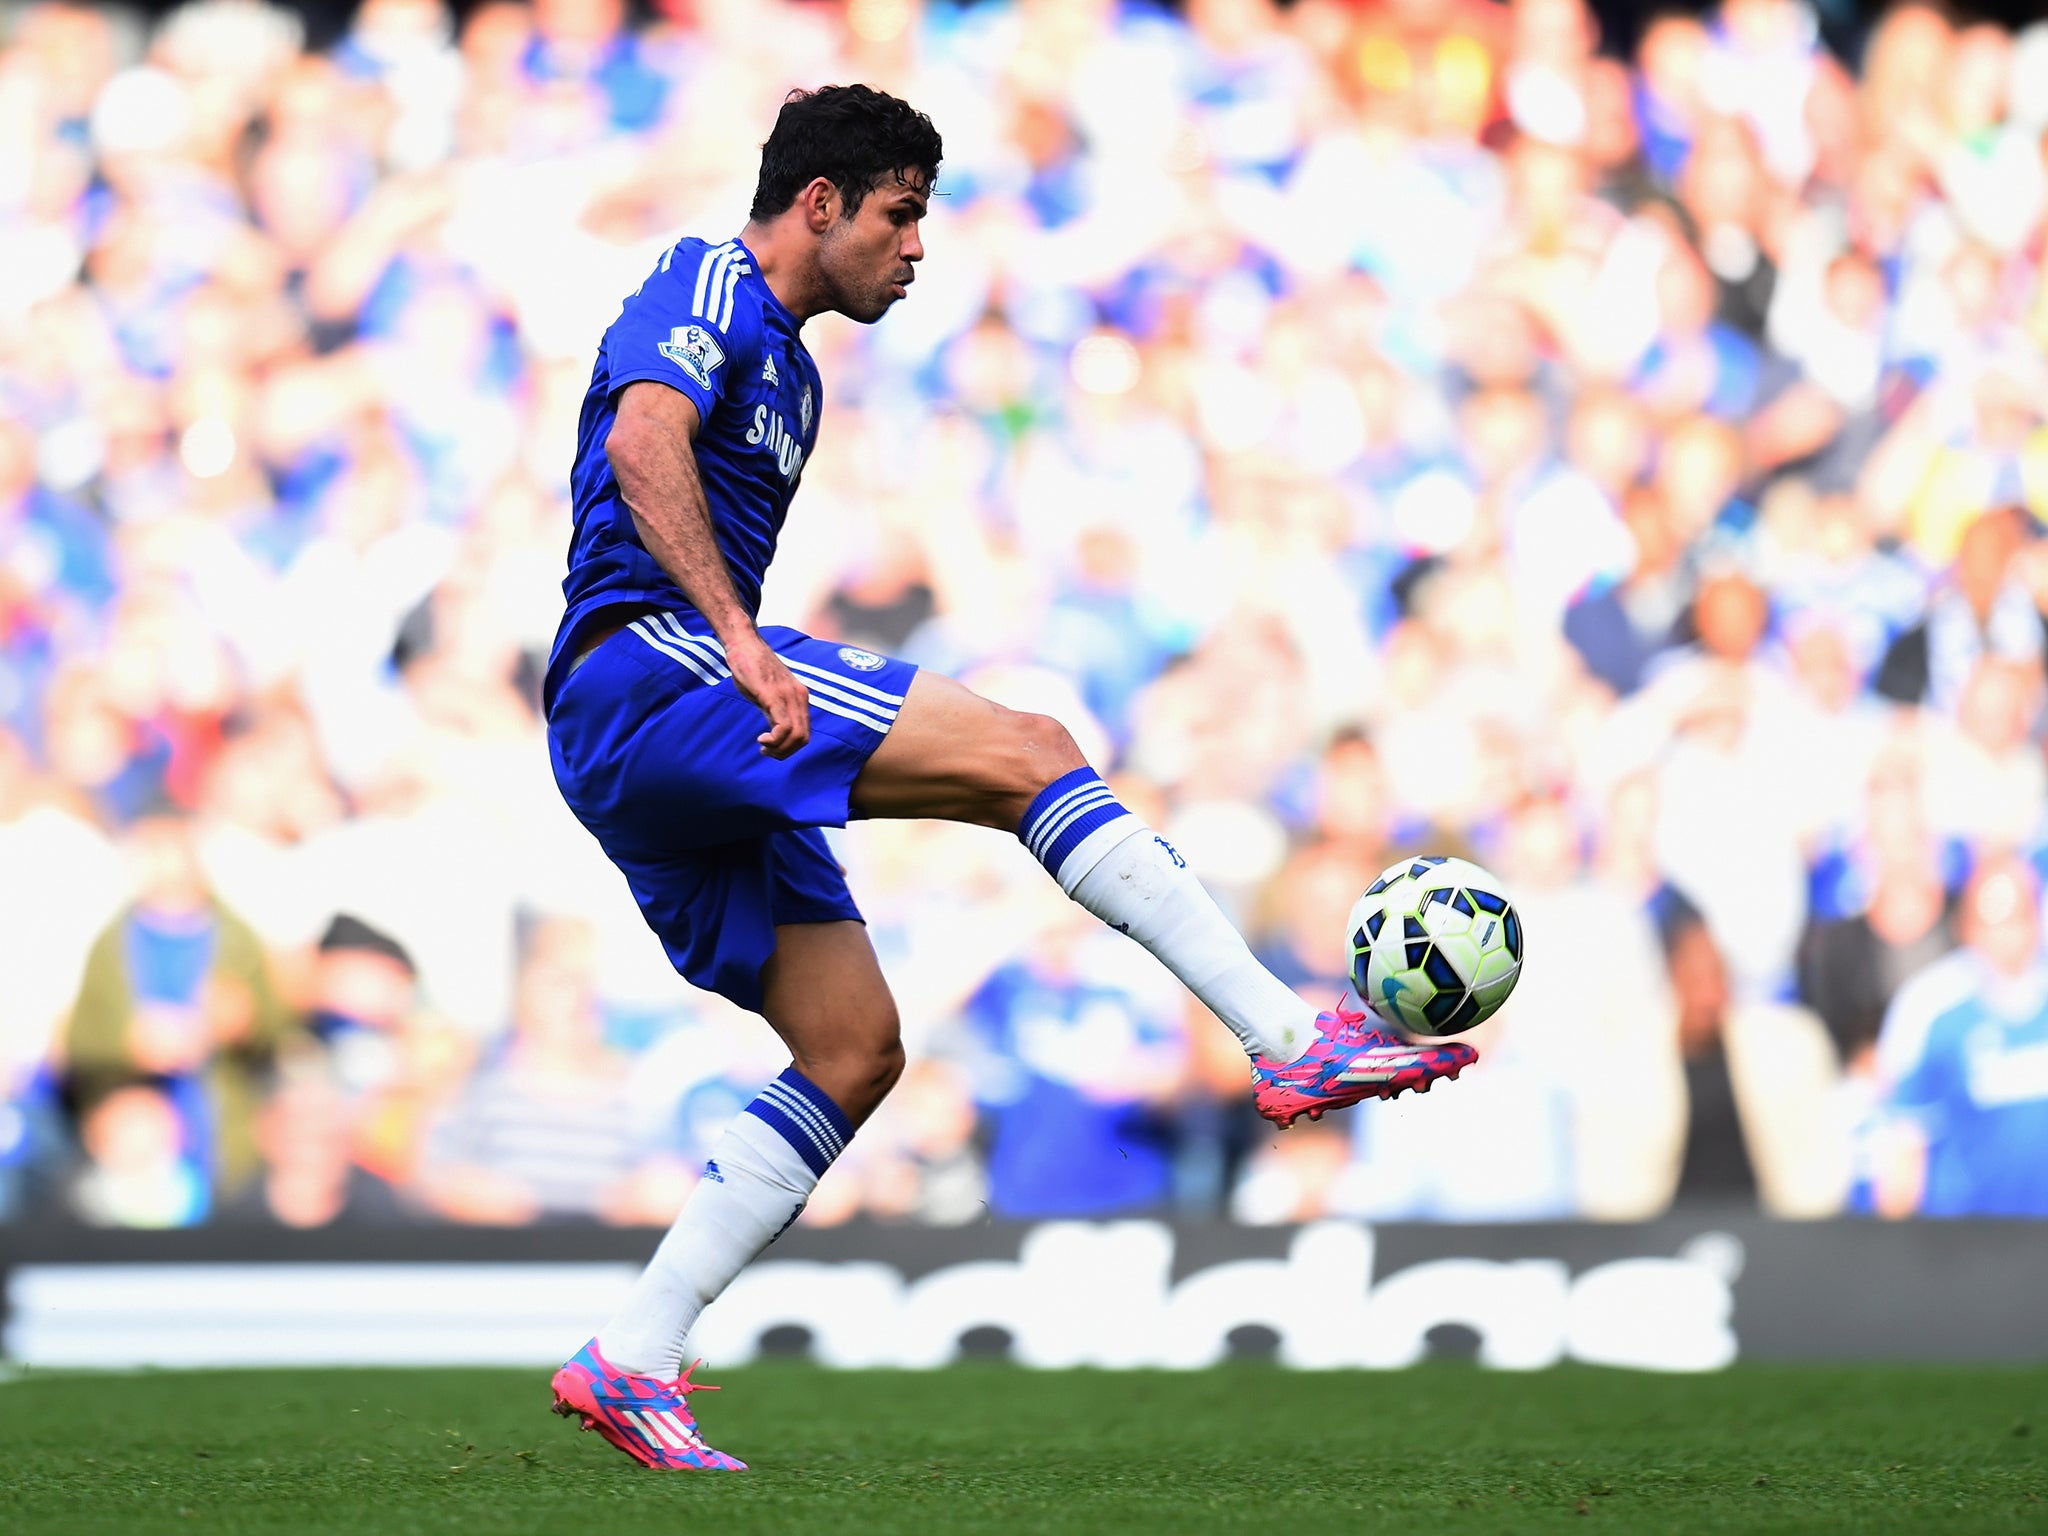 Chelsea striker Diego Costa scores against Arsenal